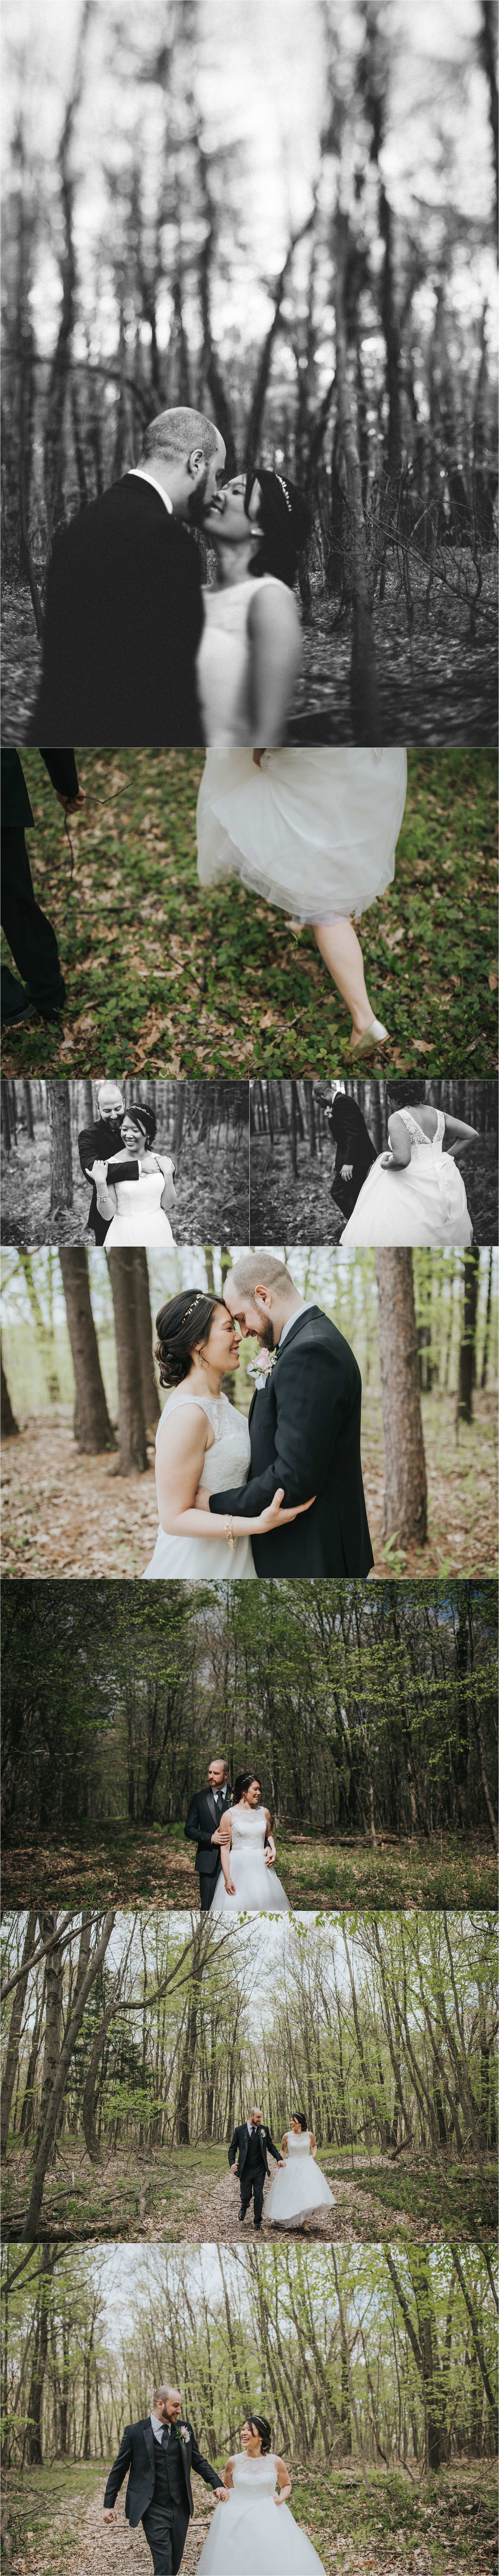 07 woodsy-bride-and-groom-portraits-knox-pa-oakwood-photo-video.jpg